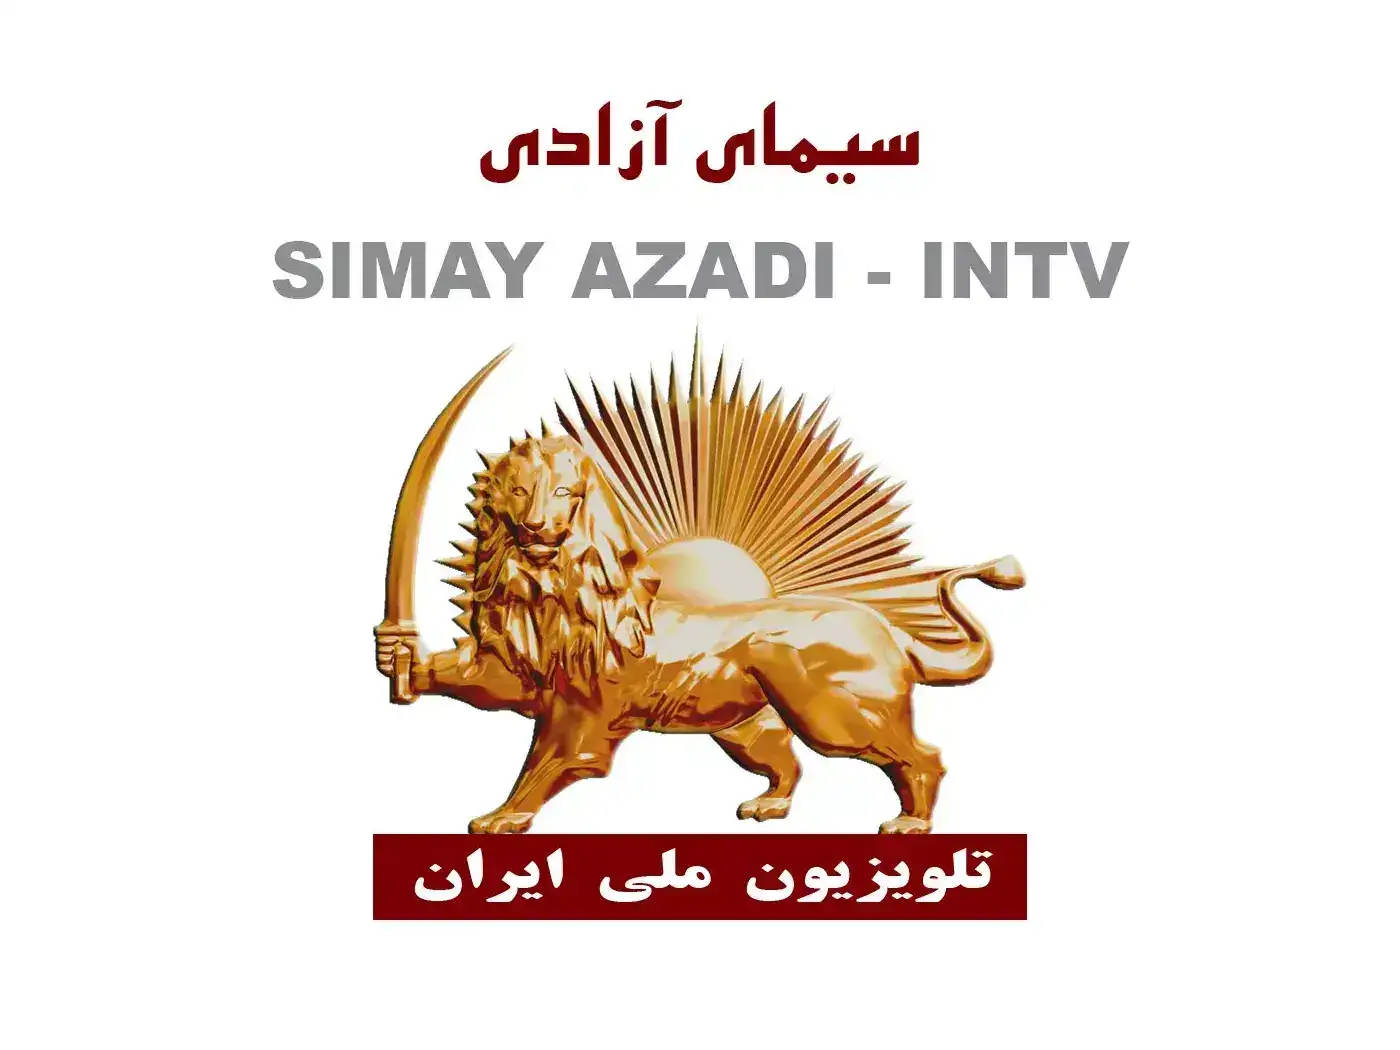 Simay-Azadi Iran National TV live